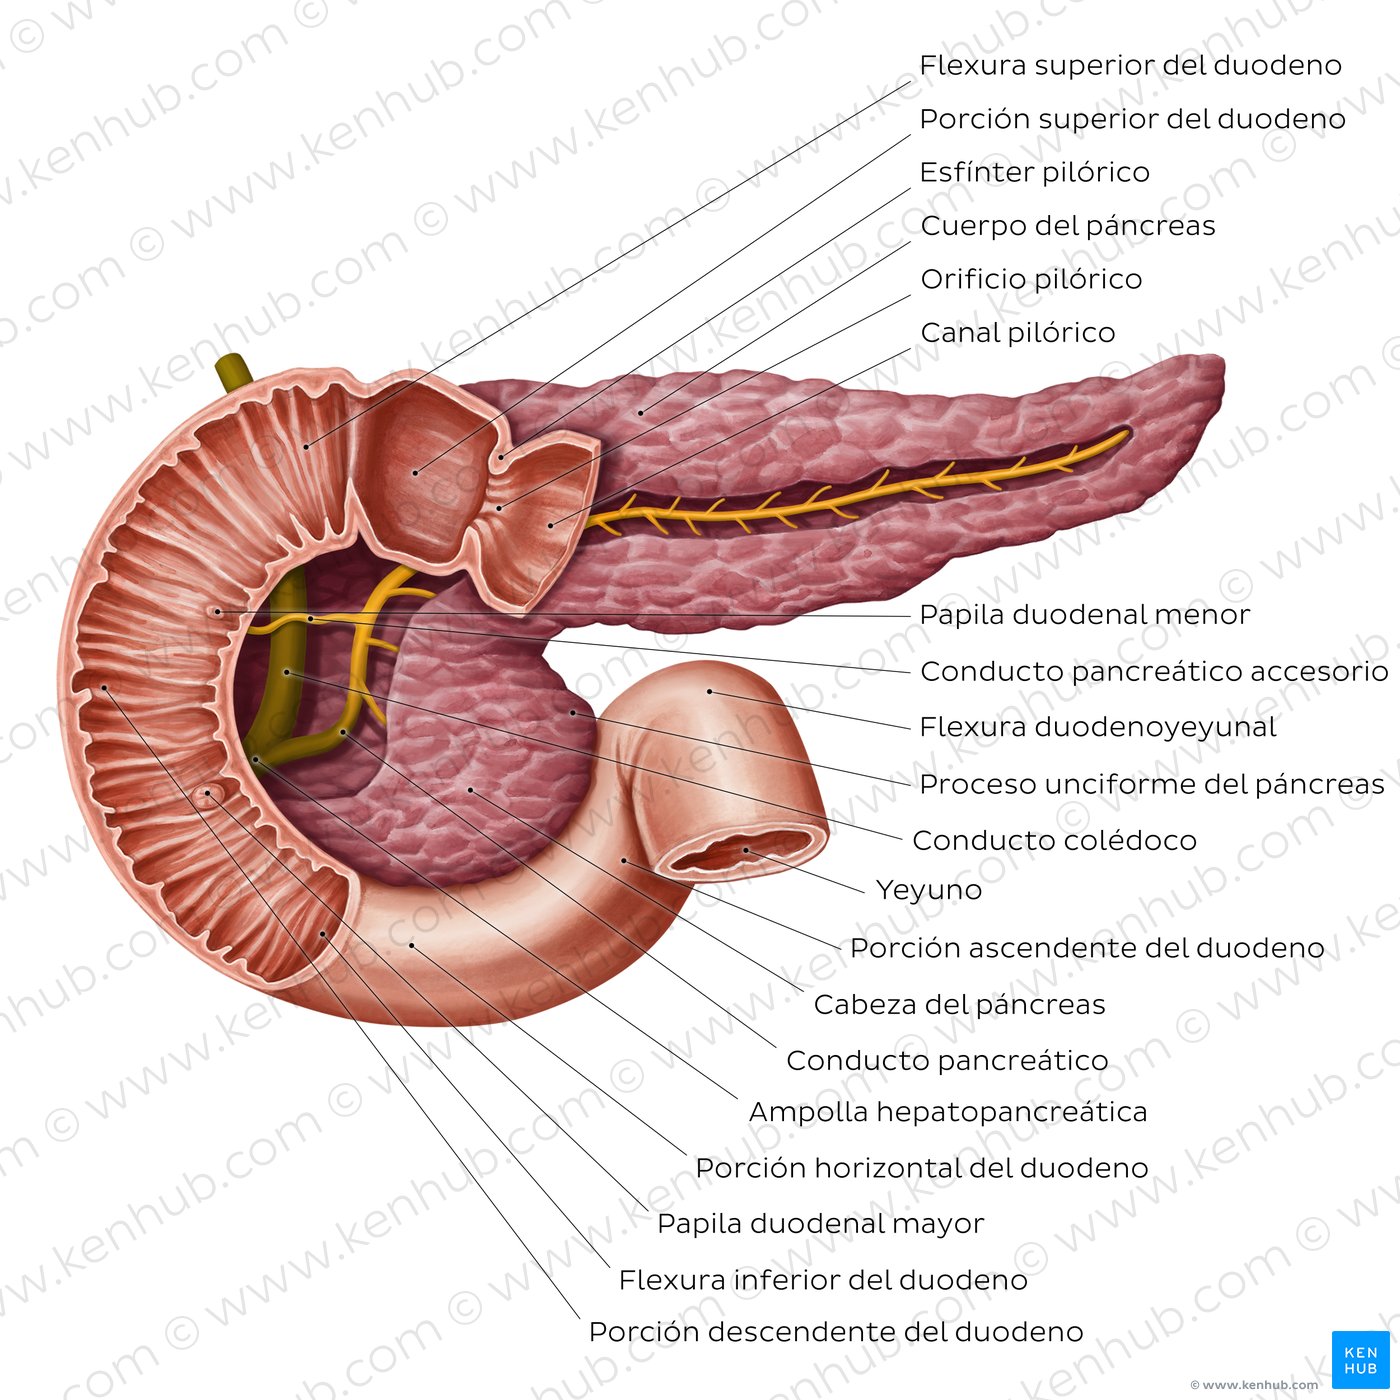 Conductos pancreáticos